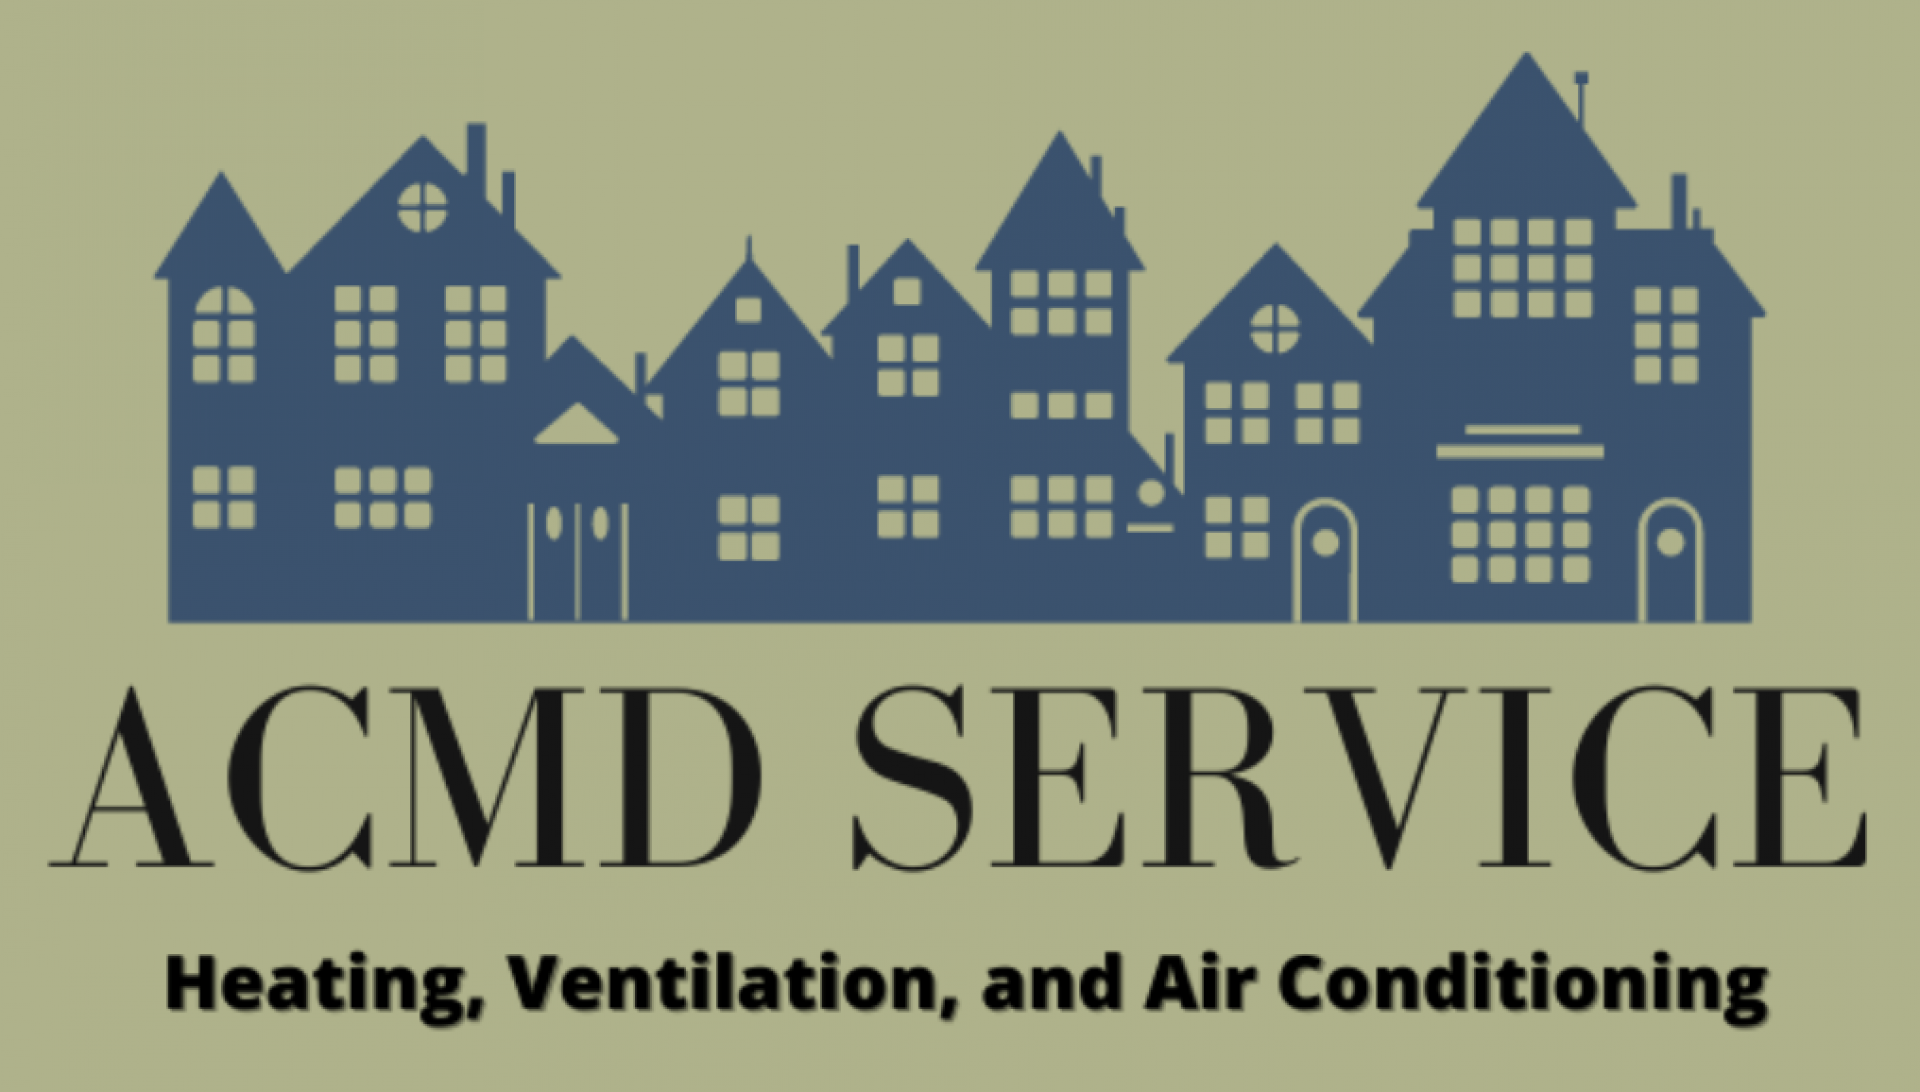 ACMD Service logo